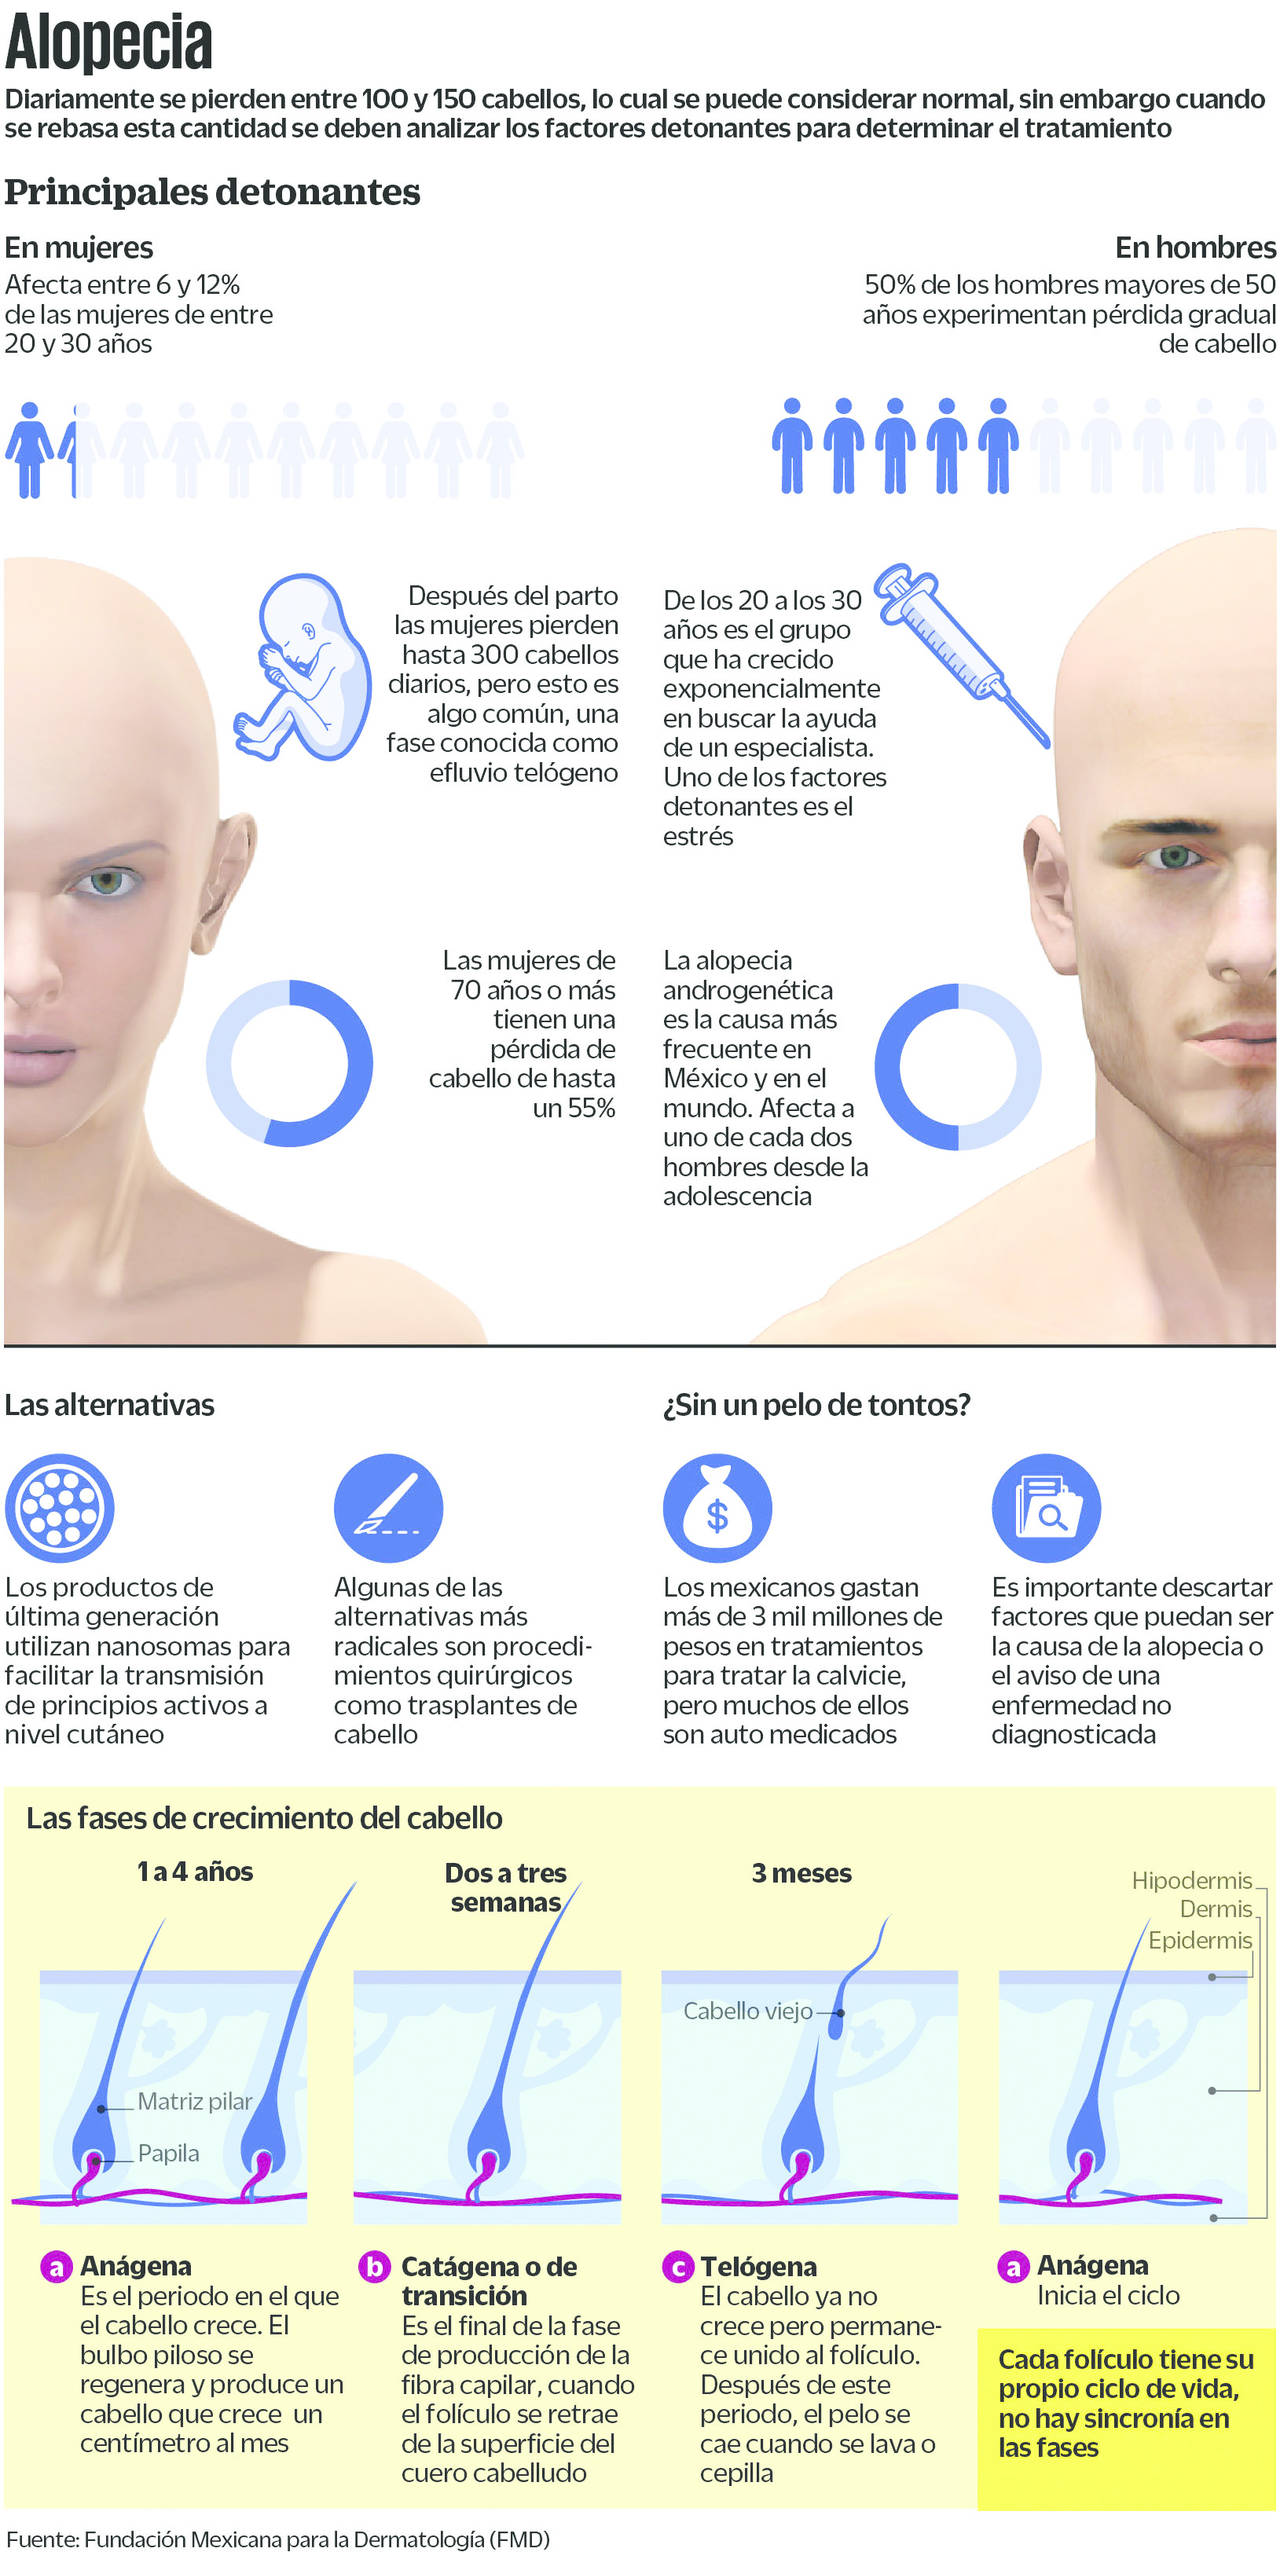 Detalles sobre la alopecia. (EL UNIVERSAL)